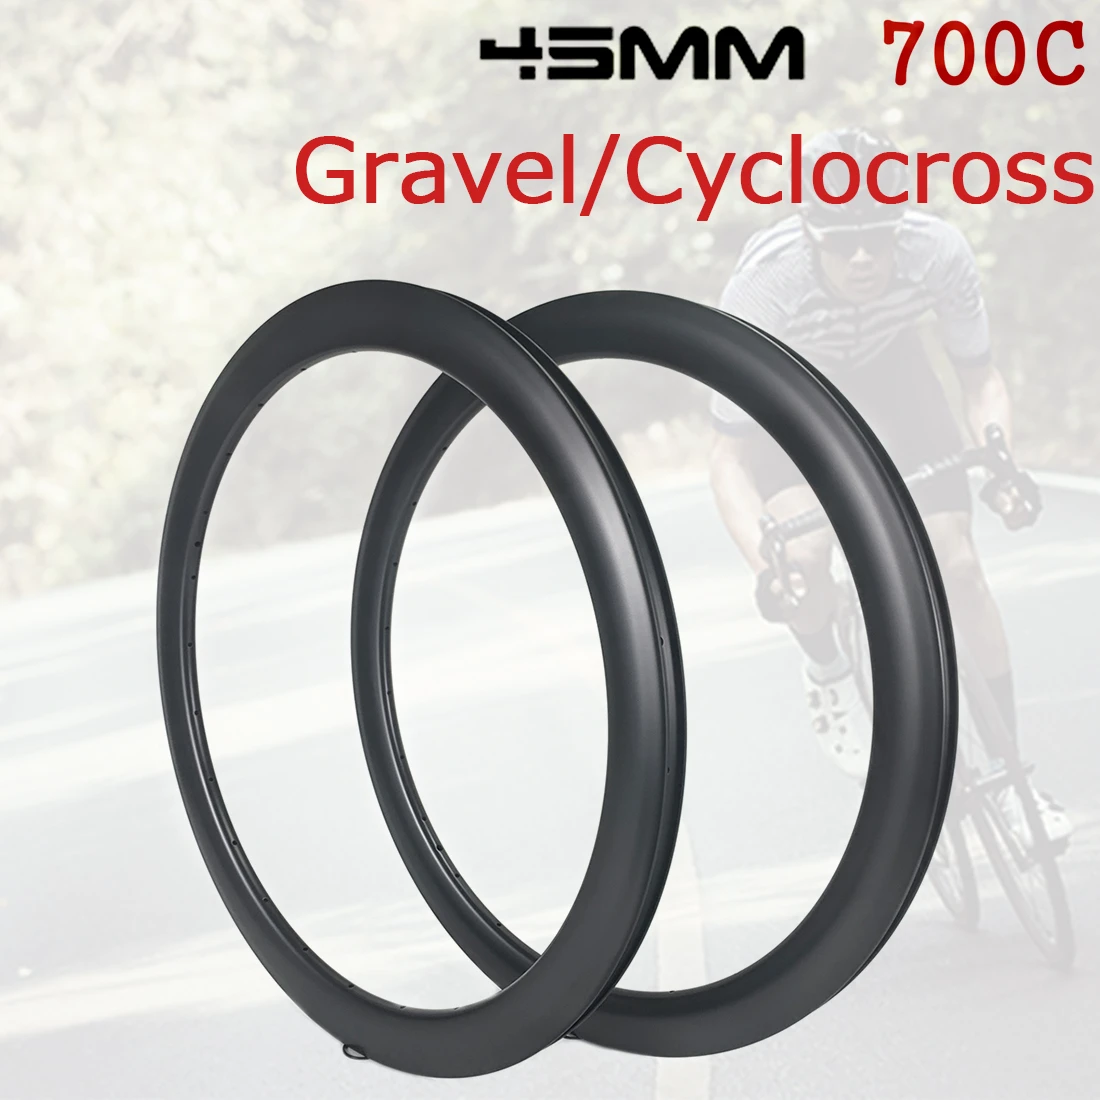 

HULKWHEELS 700C Gravel Disc Brake Carbon Fiber Rims 480g Depth 45mm Width 29mm tubeless hookless Rim Cyclocross Bicycle Wheels